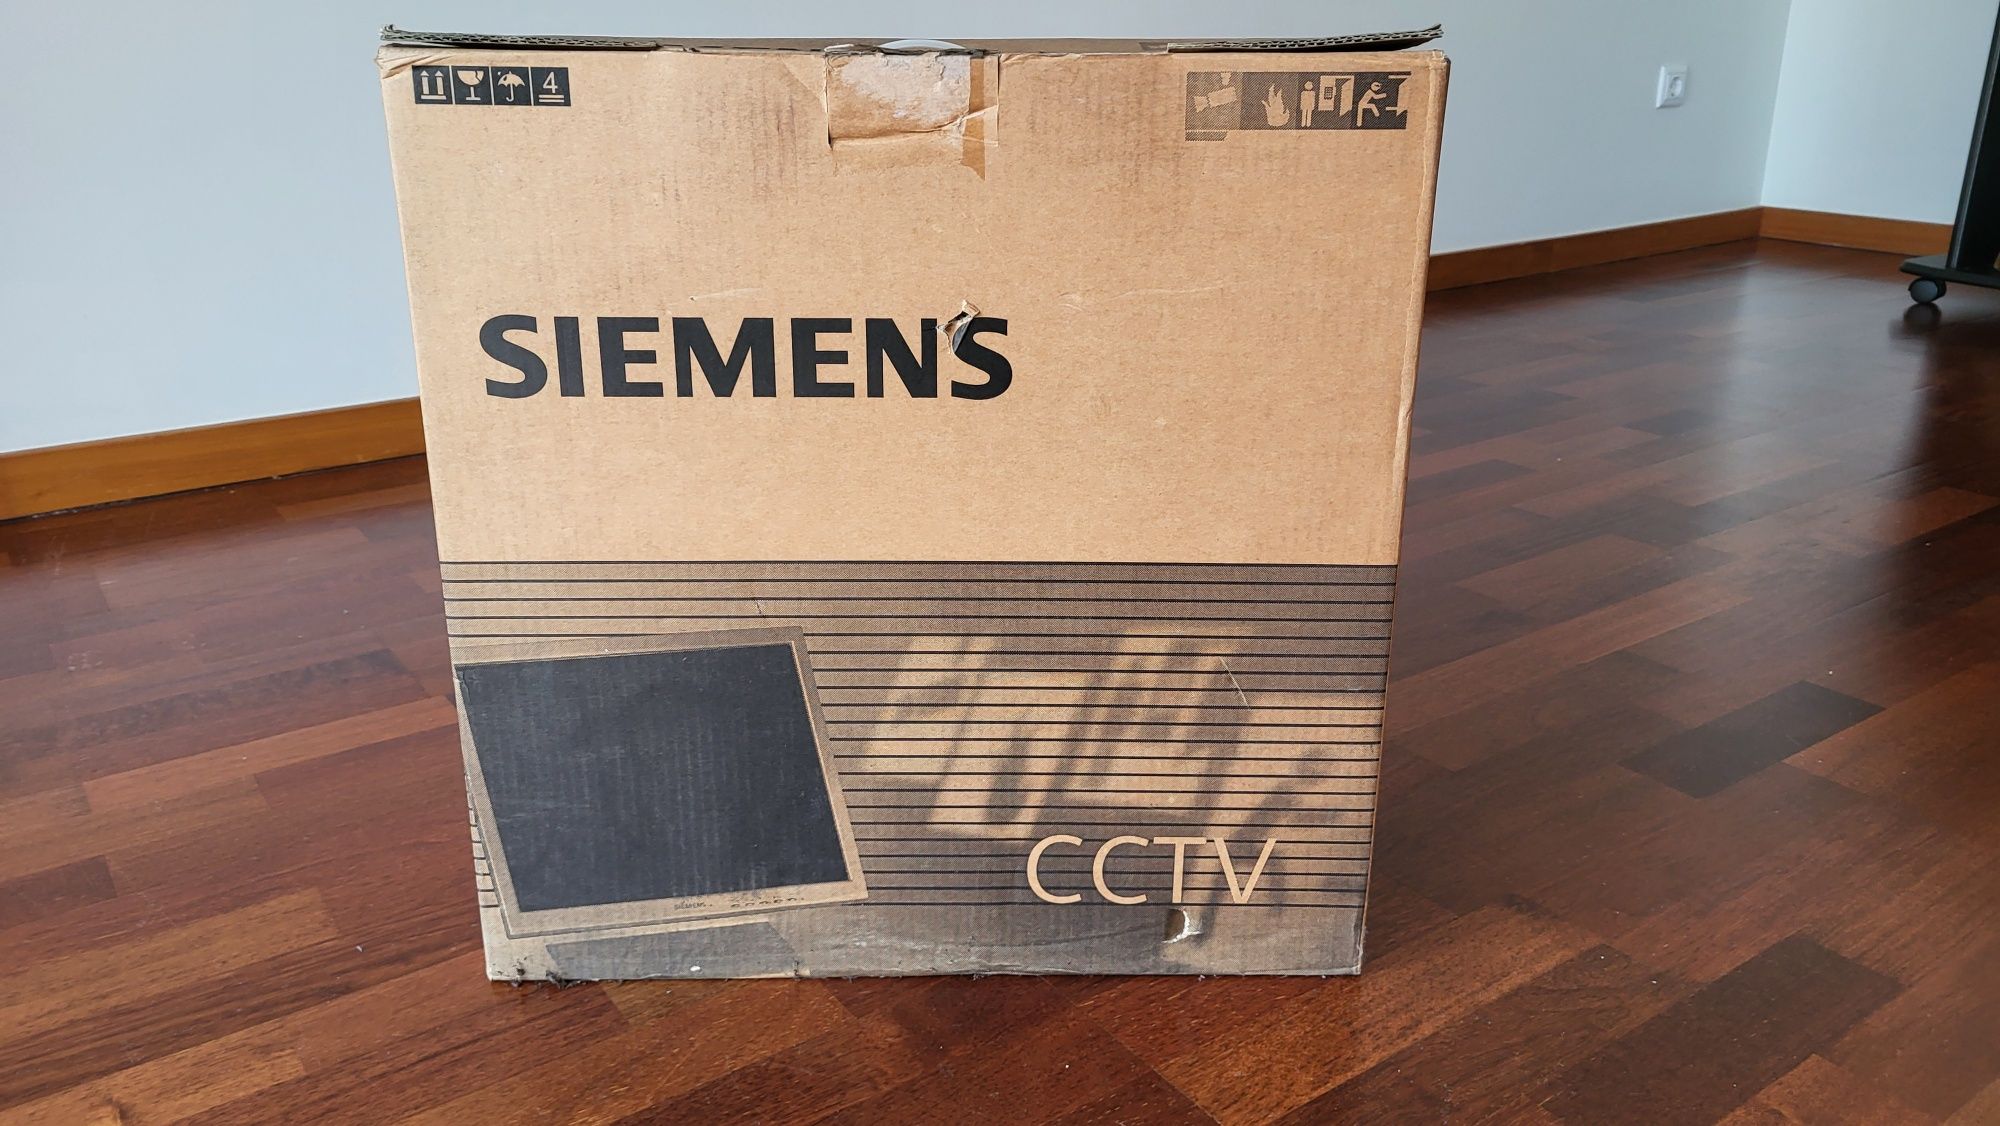 Monitor de 19" da Siemens CCTV